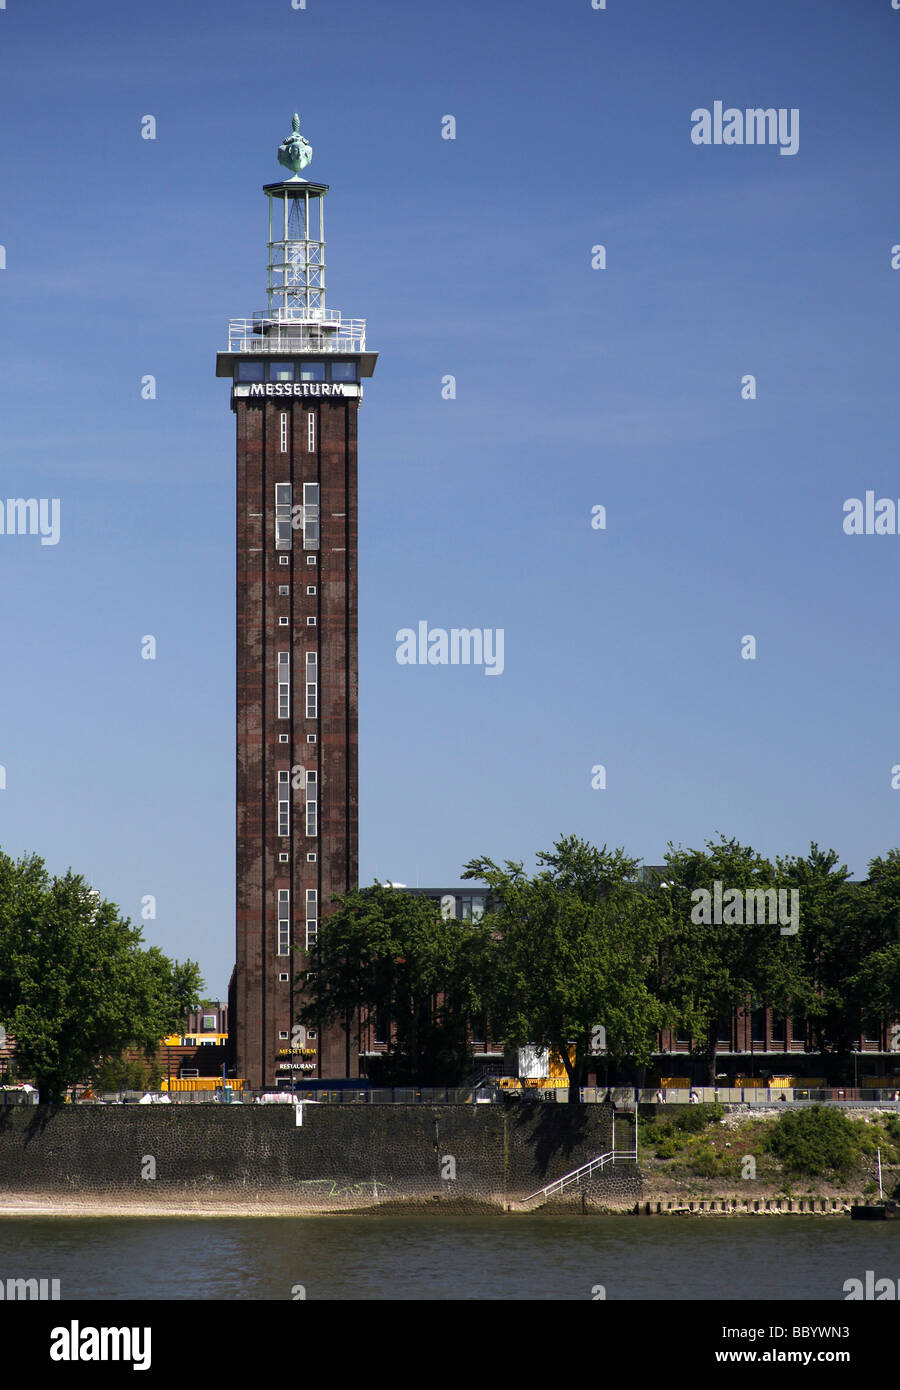 Messeturm trade fair tower at the Rheinhallen fair hall, Cologne, Rhineland, North Rhine-Westphalia, Germany, Europe Stock Photo